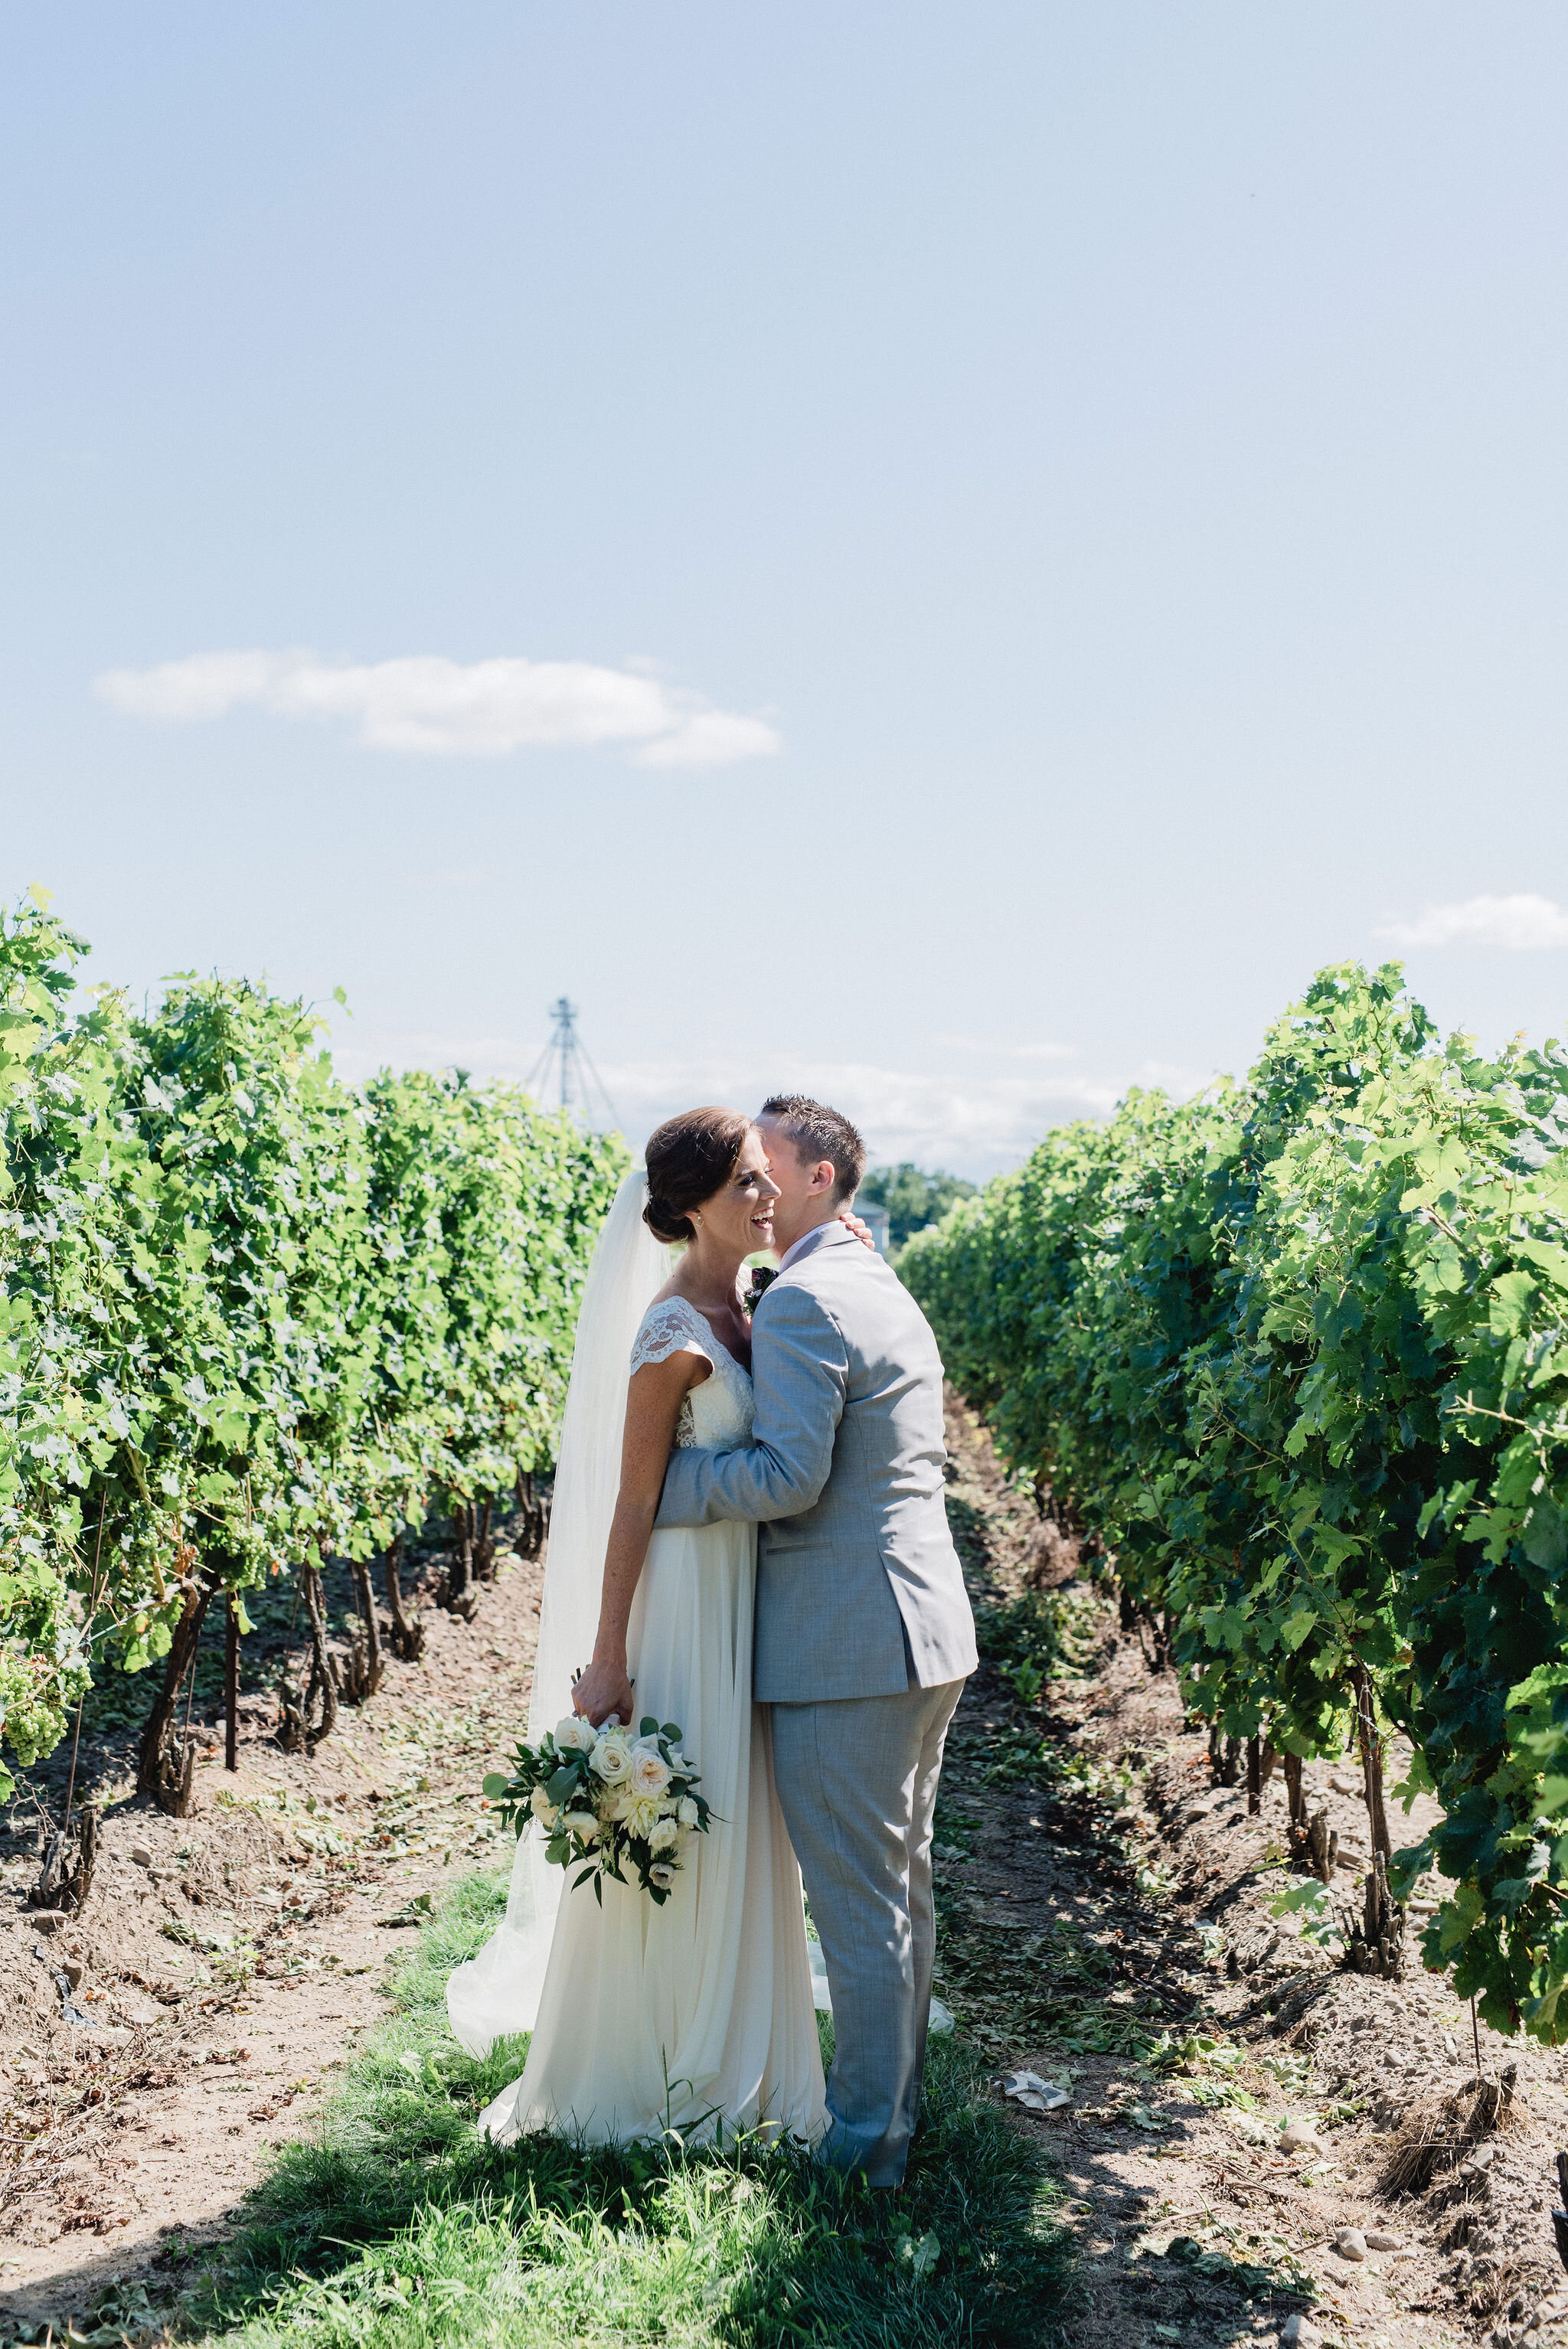 Honsberger-Estate-Wedding-Summer-Winery-Vineyard-Bride-Niagara-on-the-Lake-photos-by-Jacqueline-James-Photography-0041.JPG